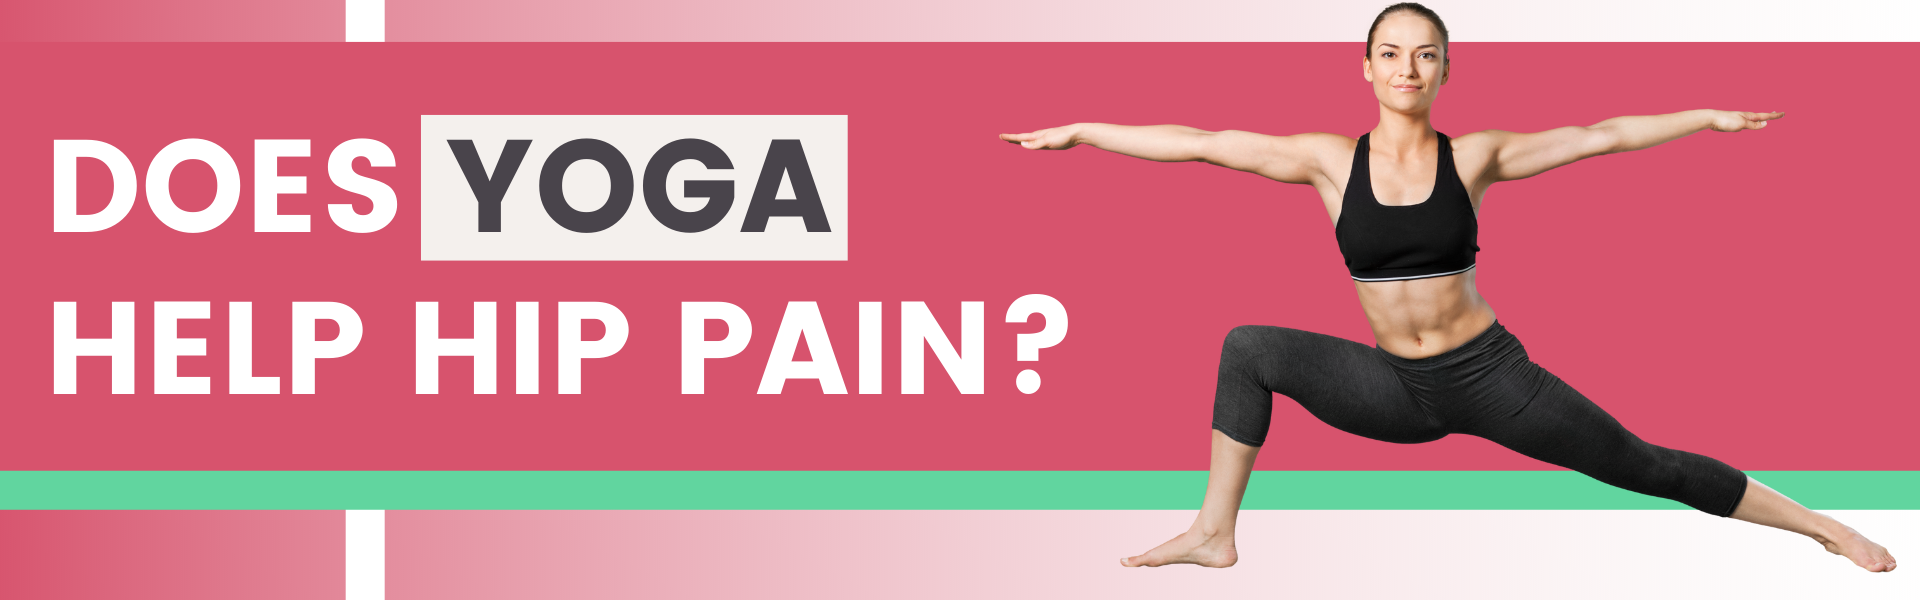 Does Yoga Help Hip Pain?